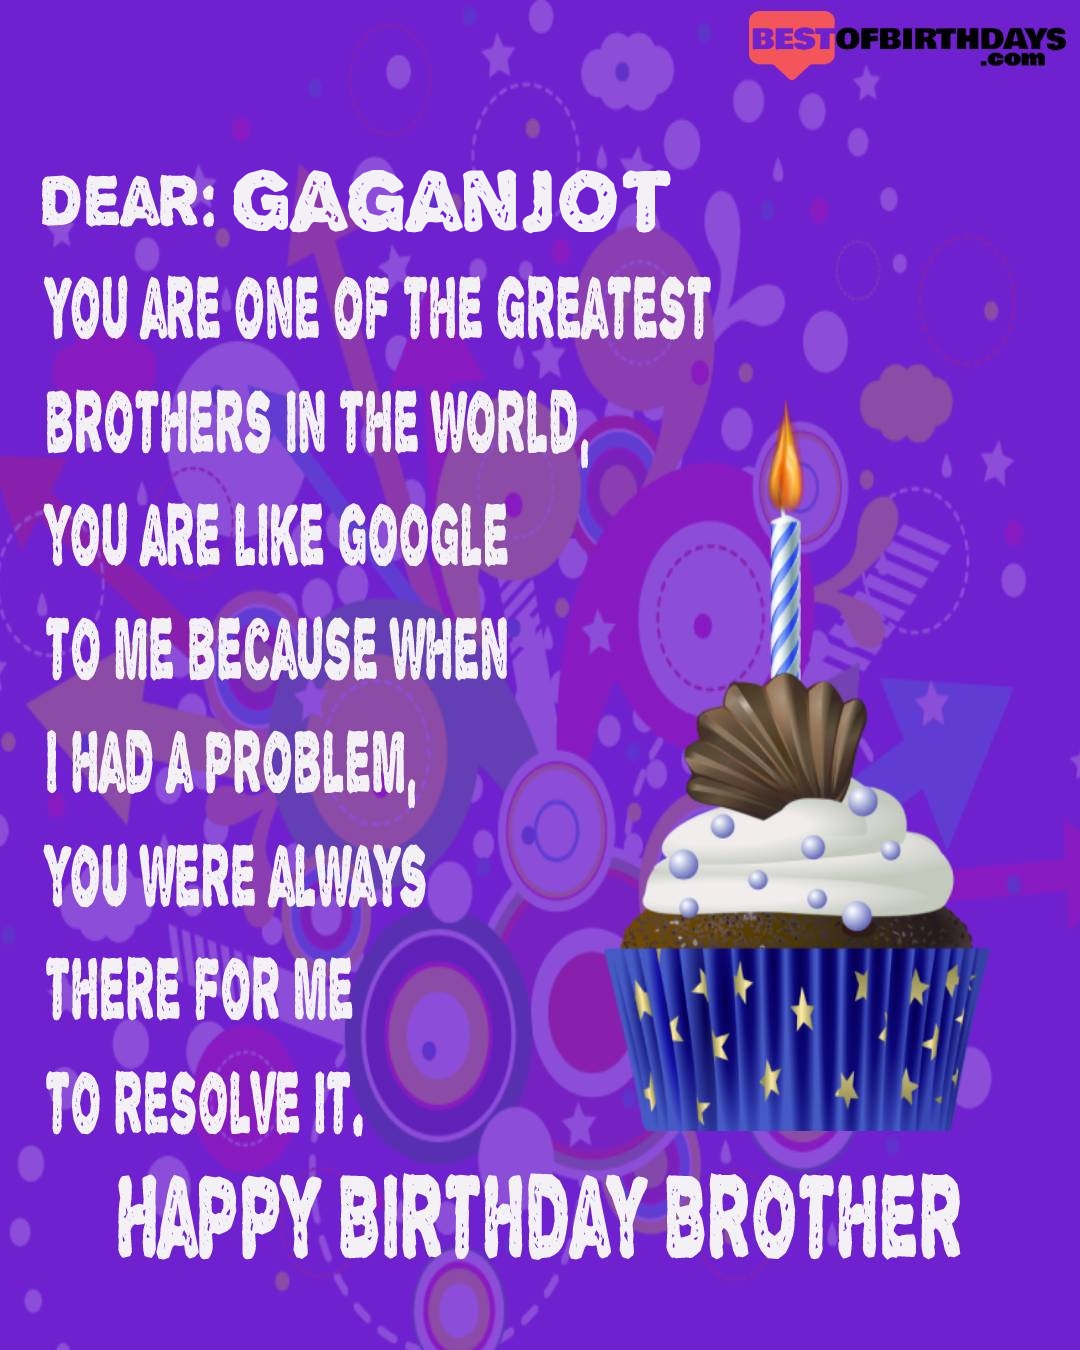 Happy birthday gaganjot bhai brother bro